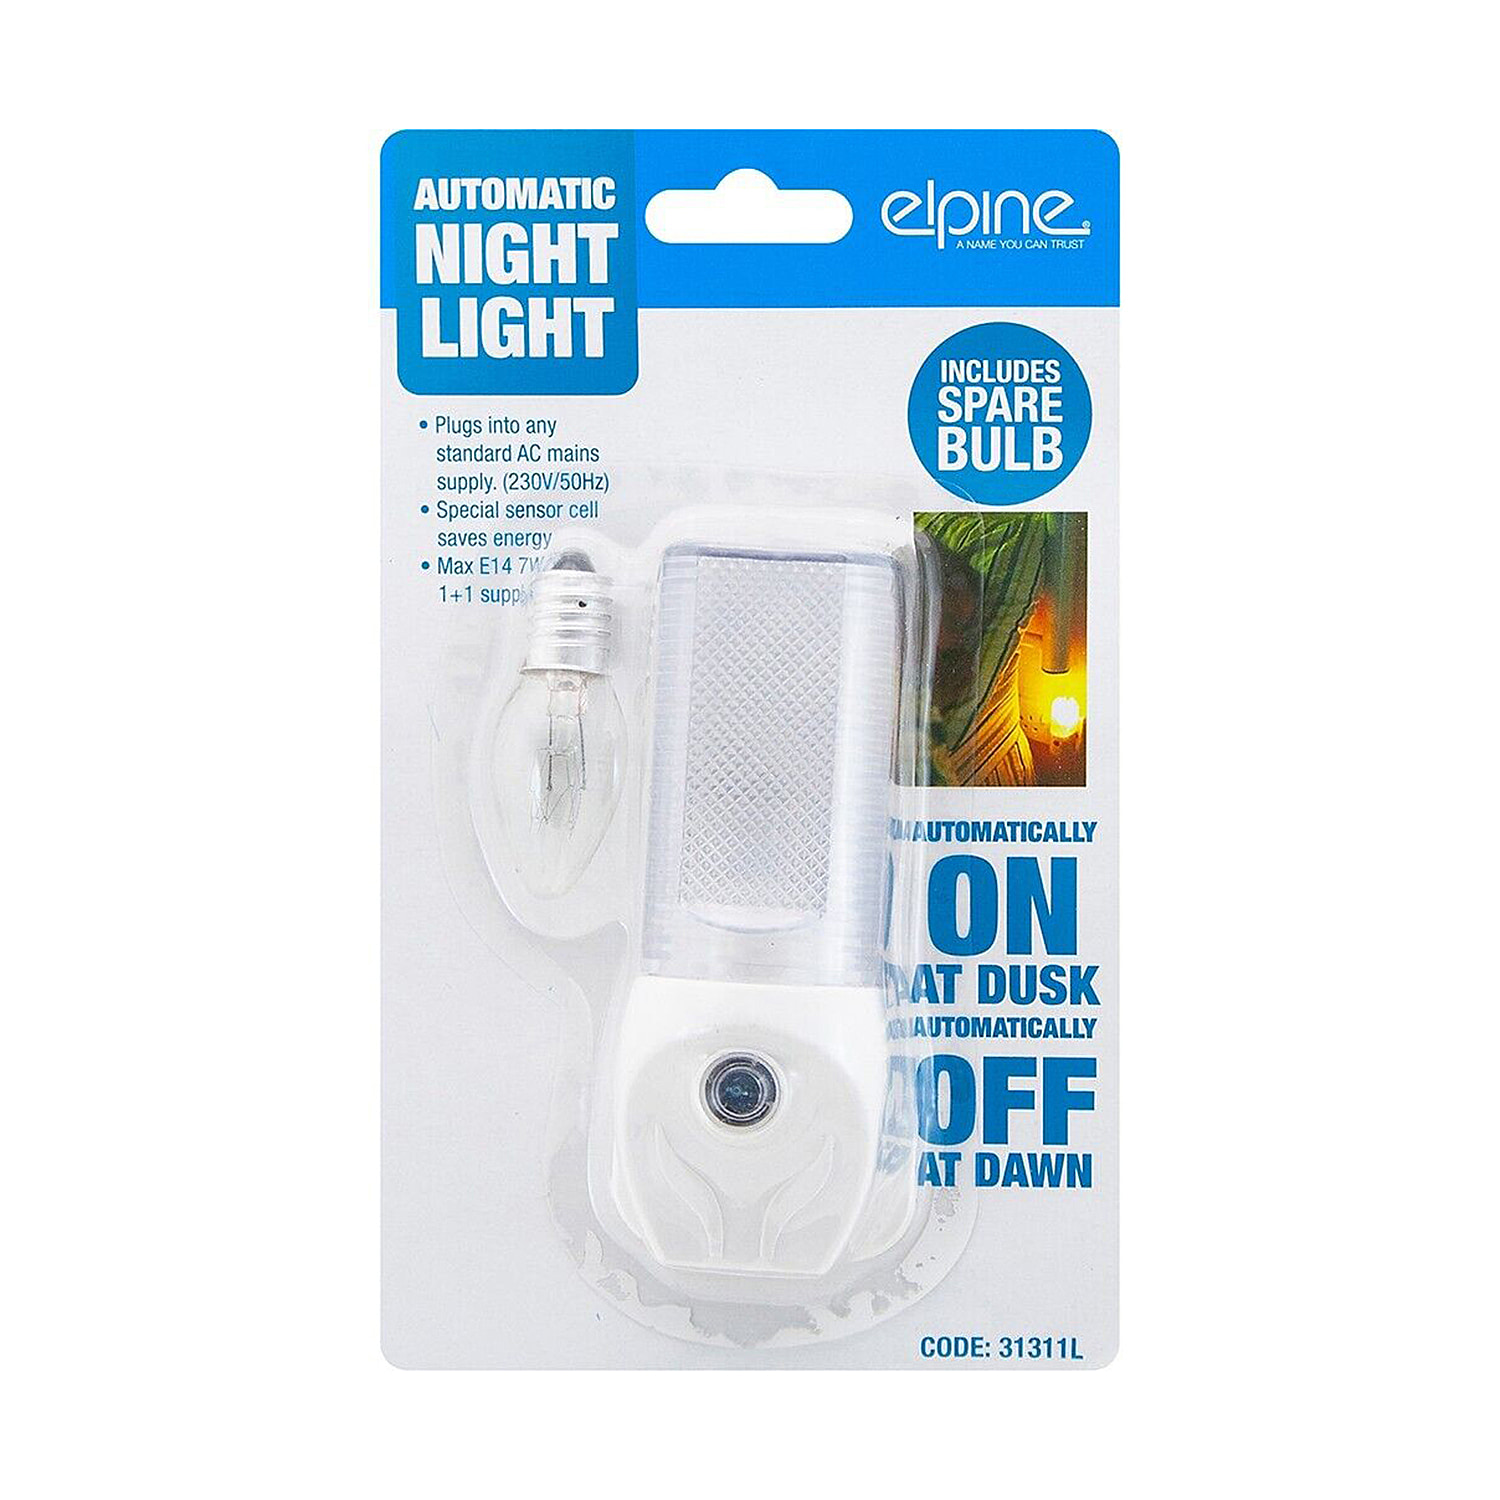 ELPINE-Automatic-LED-Night-Sensor-Light-with-Spare-Bulb